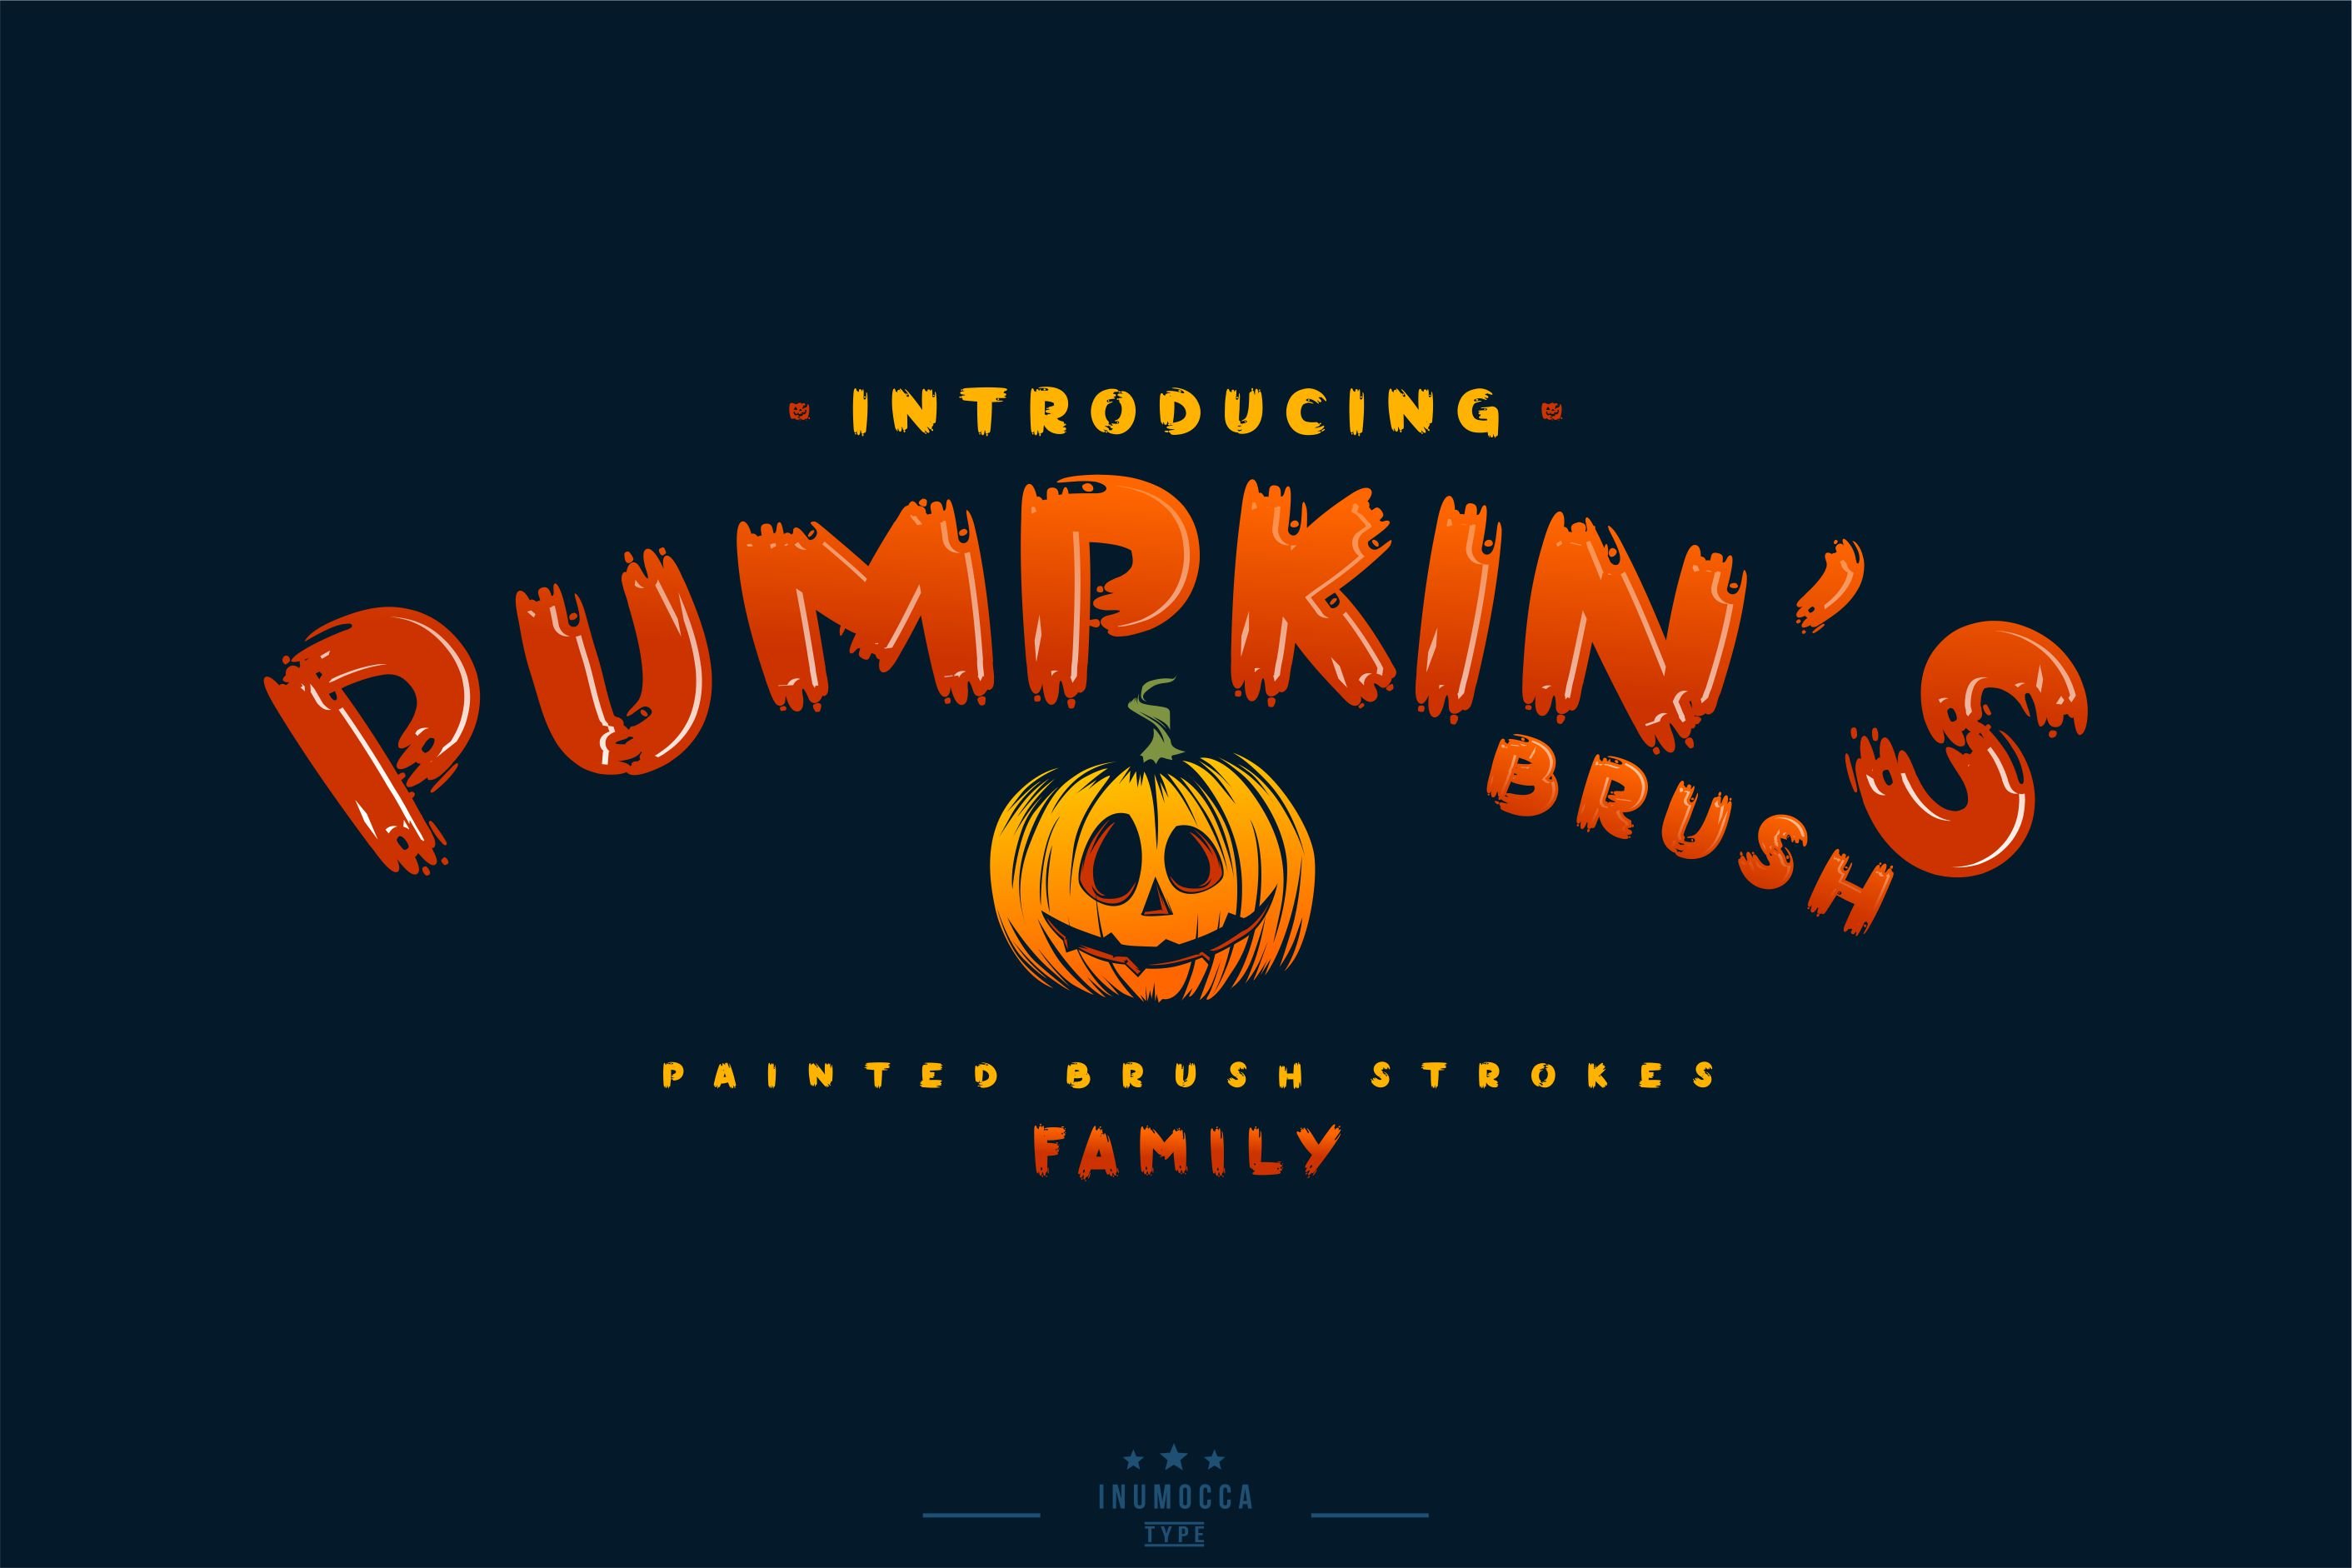 Pumpkin’s Brush cover image.